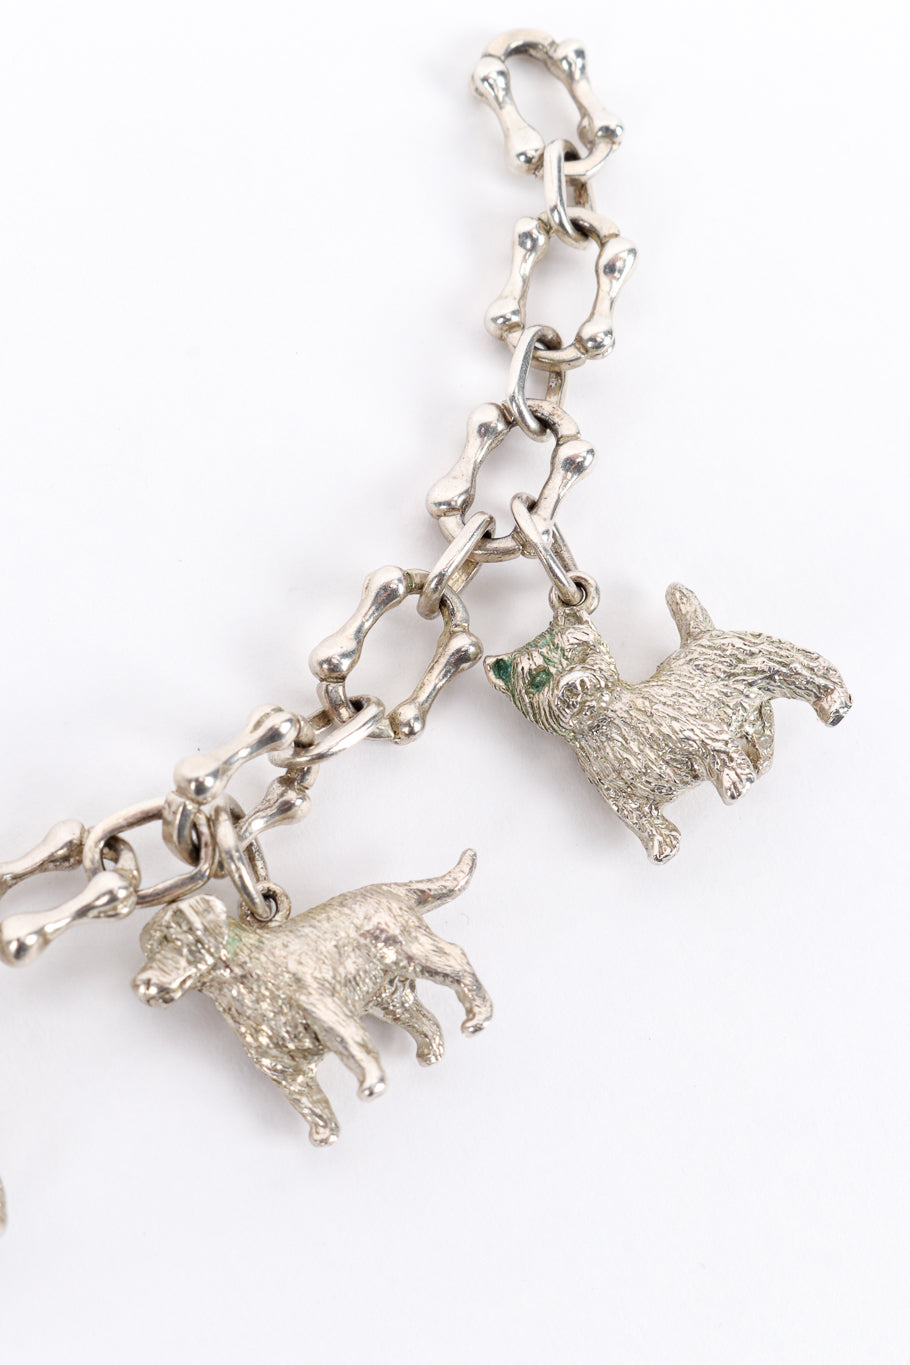 Vintage Tiffany & Co. Sterling Dog Charm Bracelet charm closeup @recess la